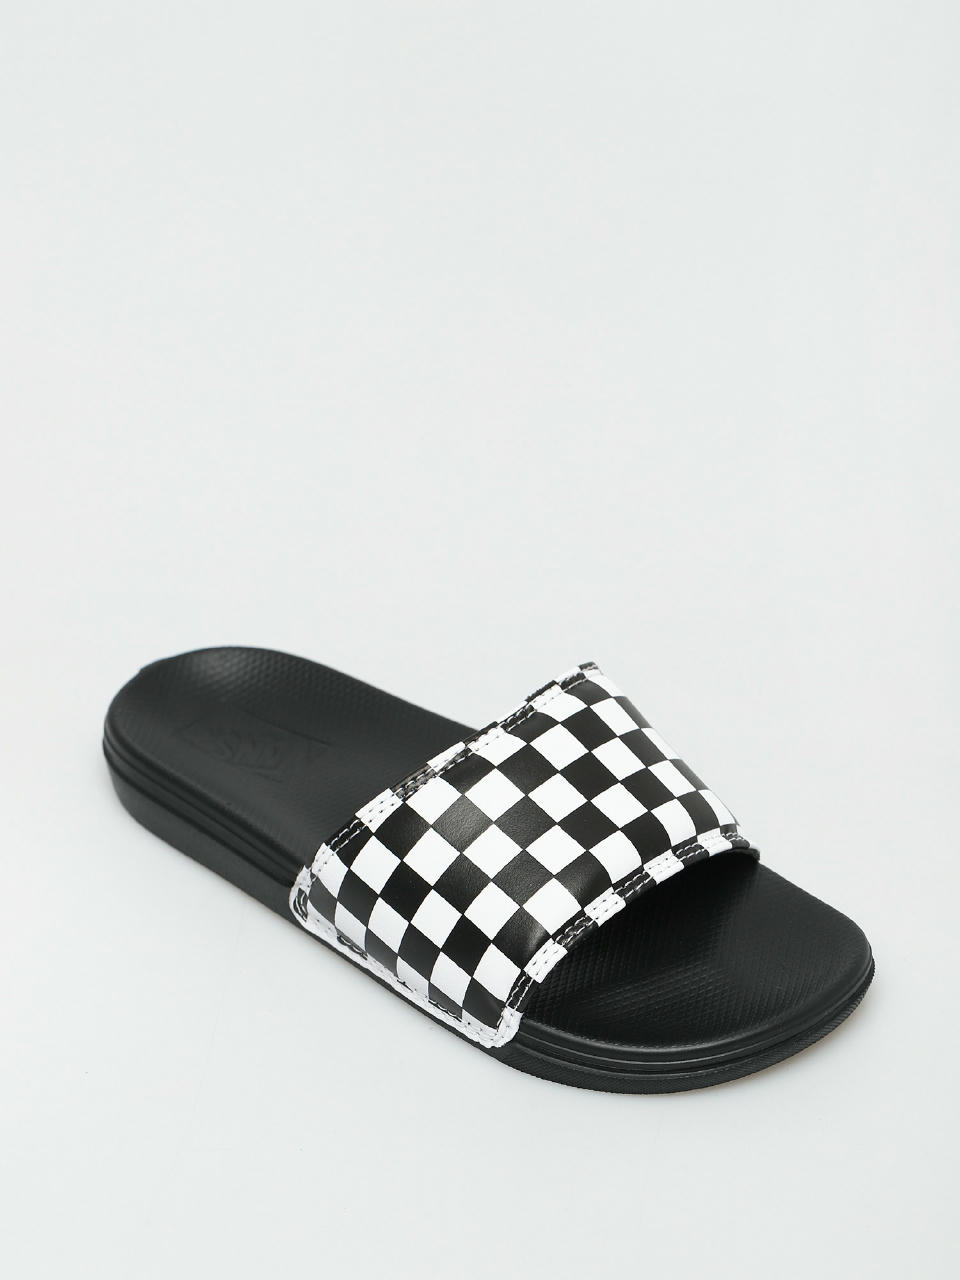 Обувки Vans La Costa Slide On (checkerboard/truwht/blk)